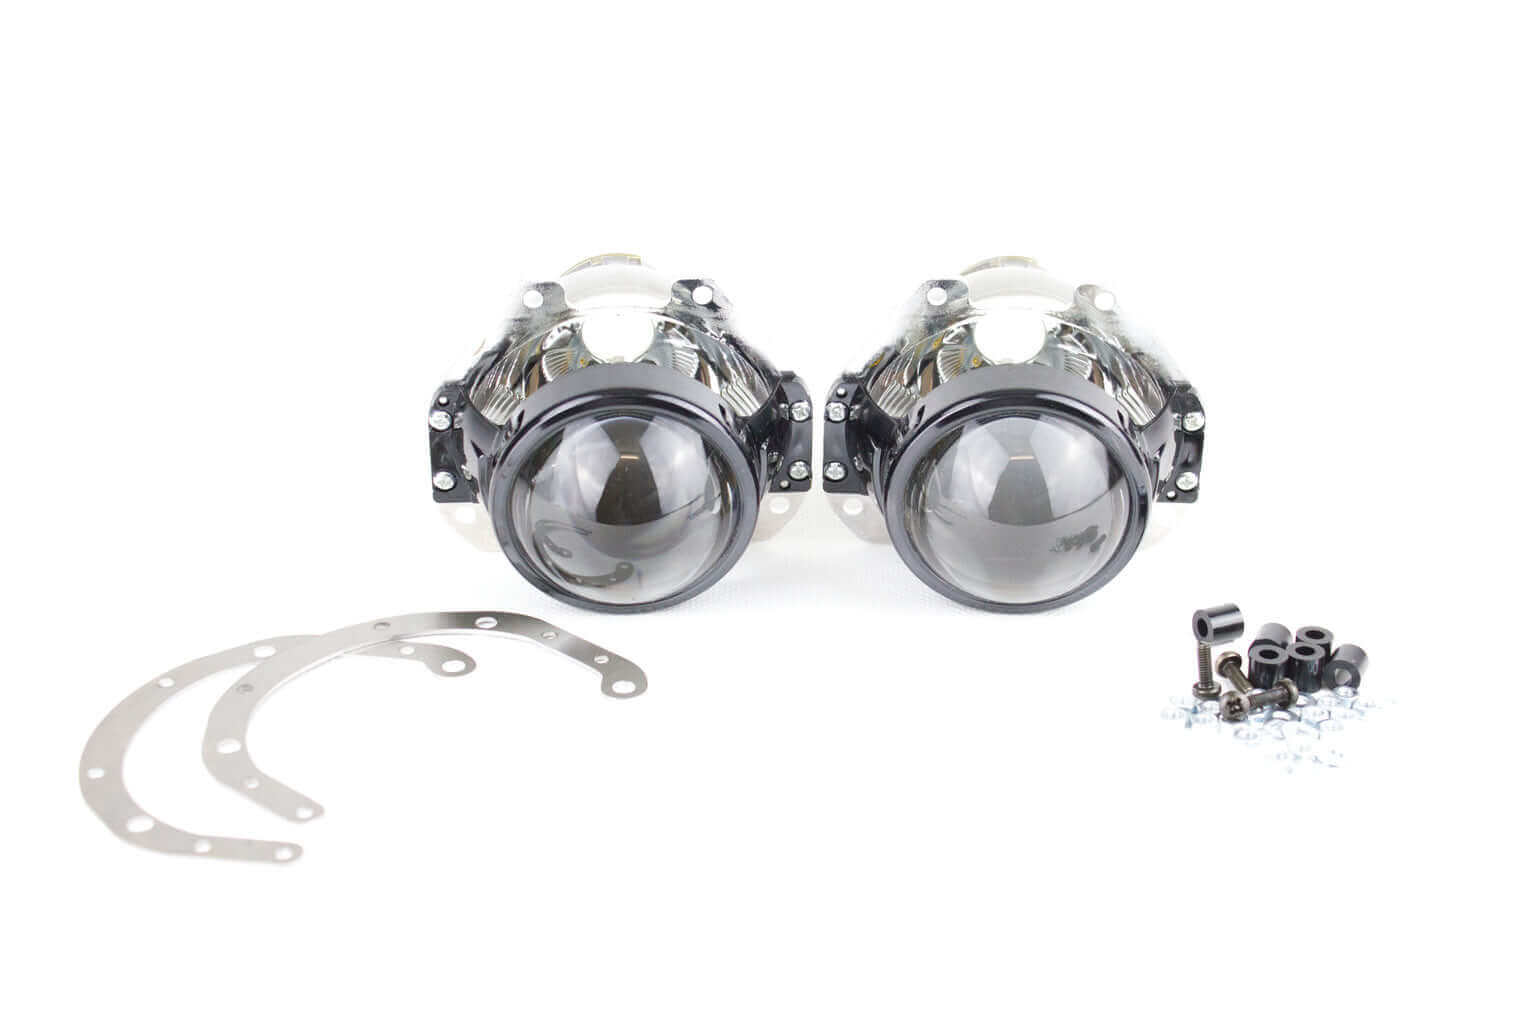 Chevrolet Camaro 2010-2015 headlight repair & upgrade kit for bi-xenon HID headlights